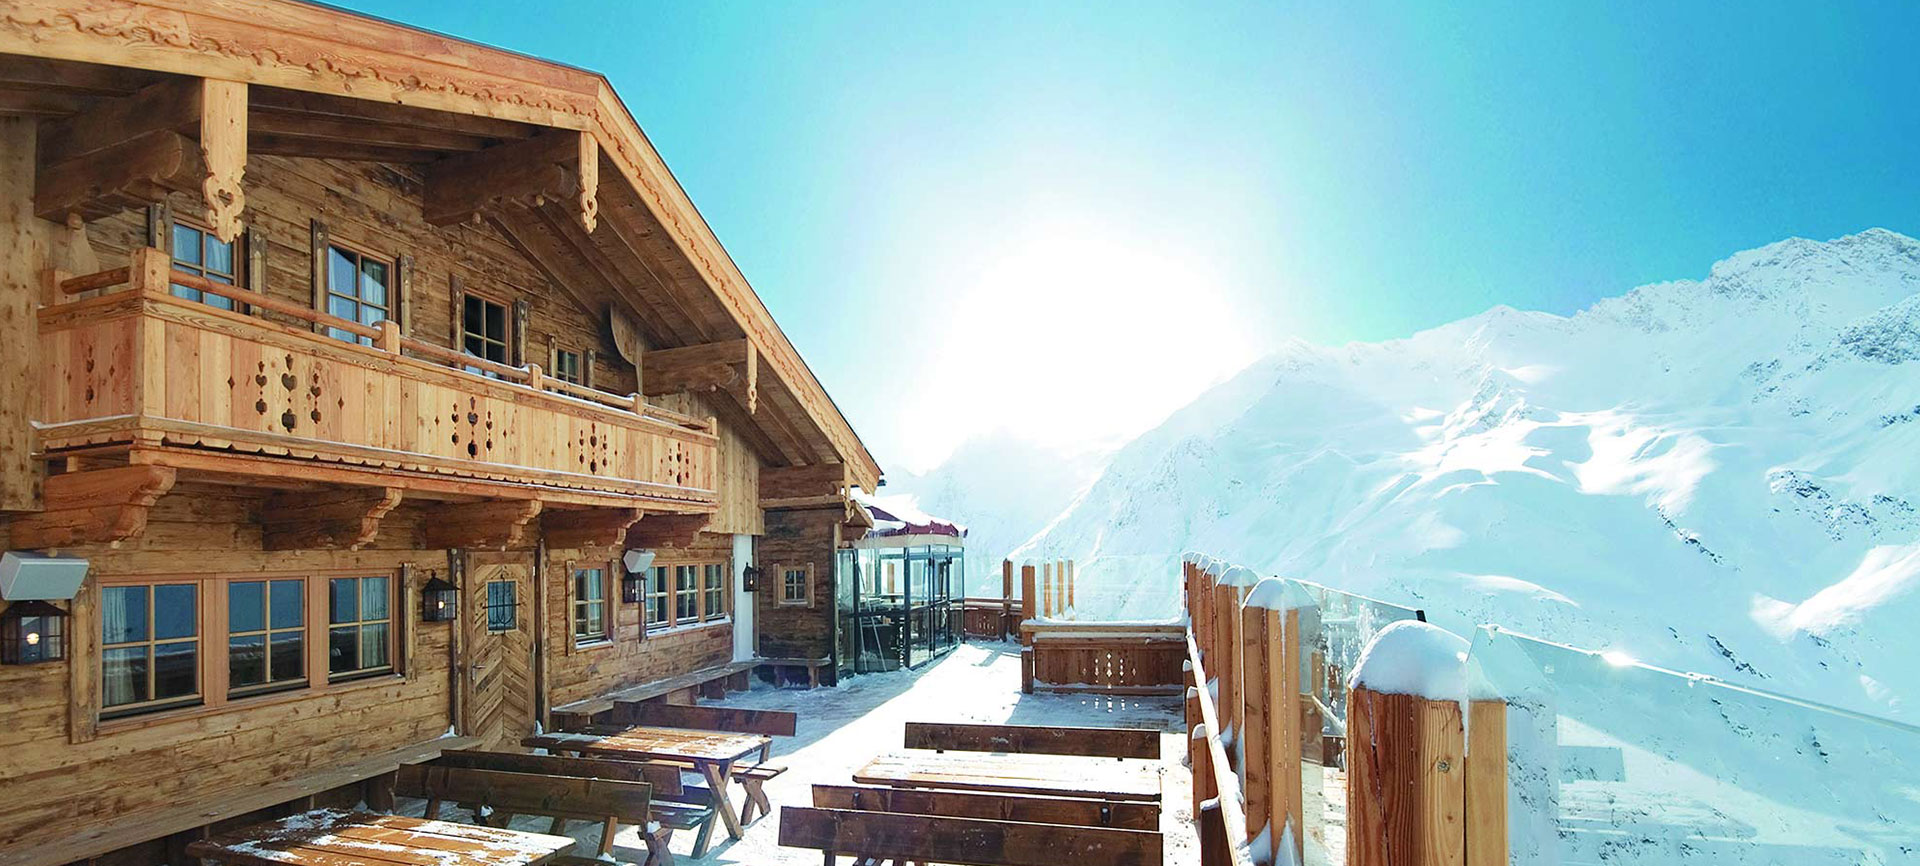 The Sunny Alpine Restaurant at 2,670m